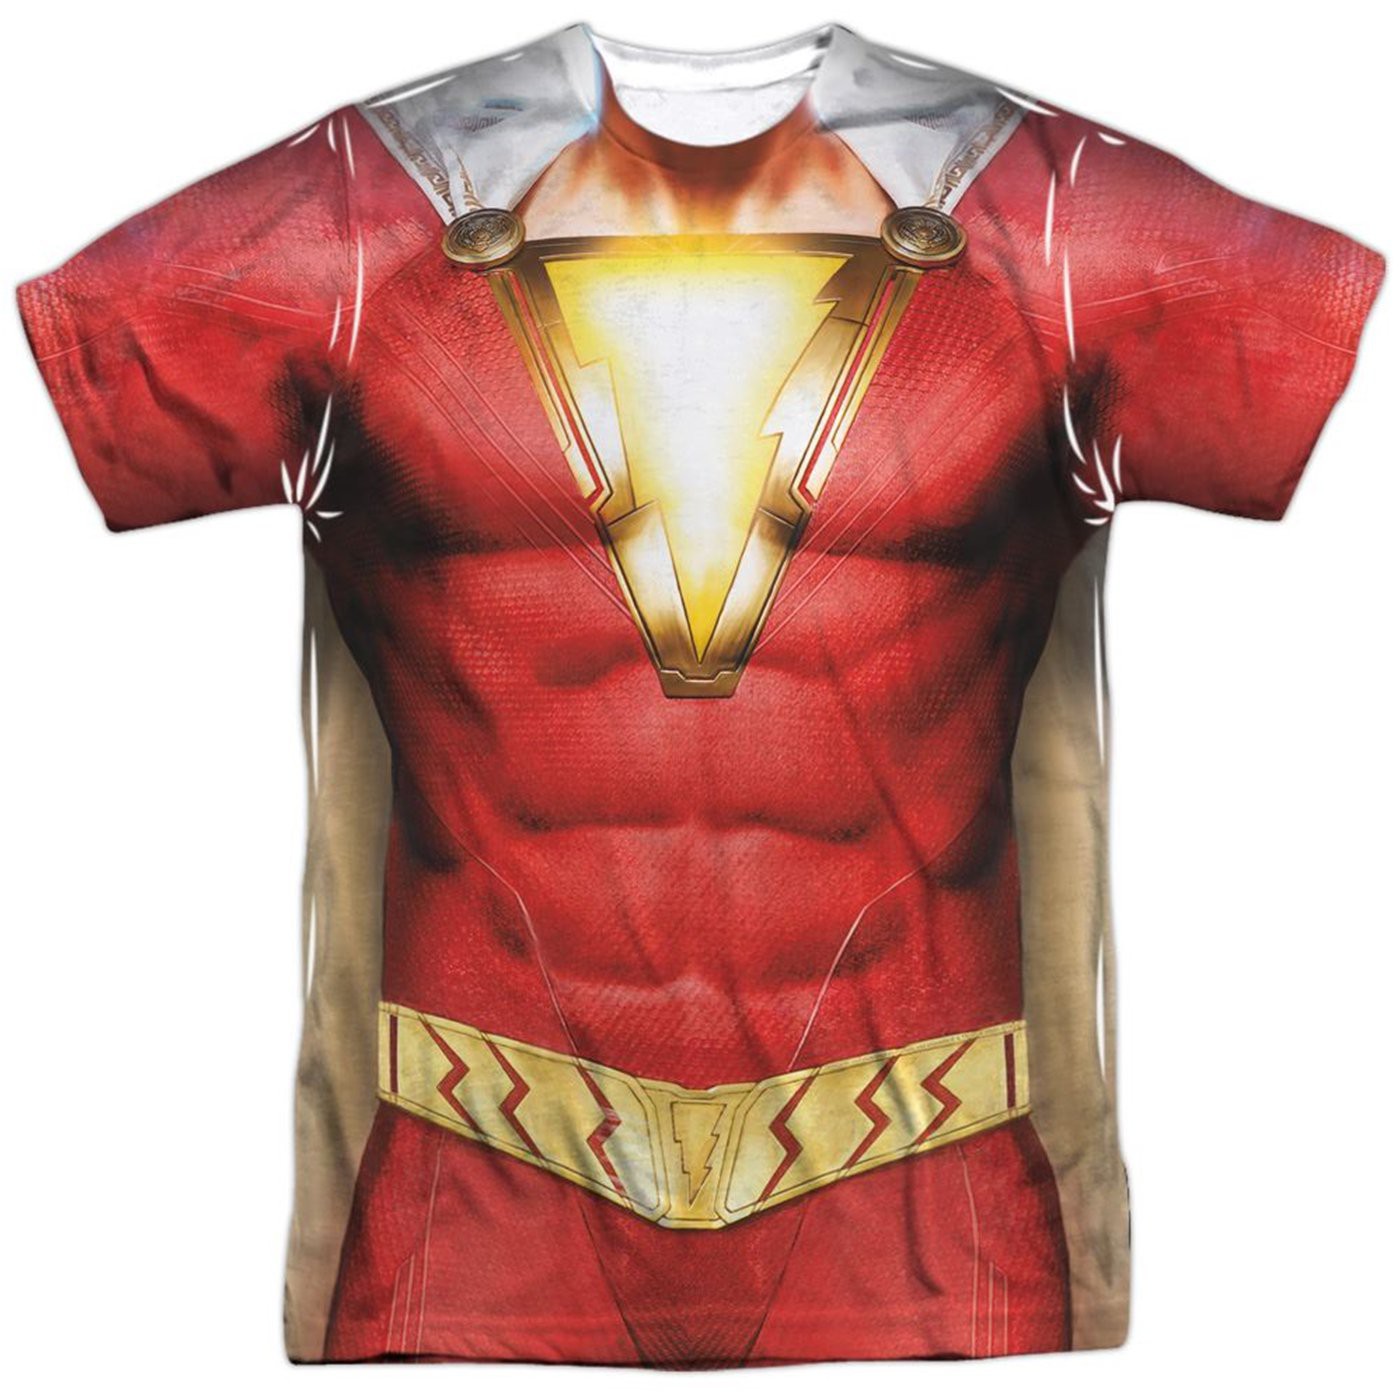 Shazam Movie Costume Uniform Sublimated Front and Back Print Men's T-Shirt